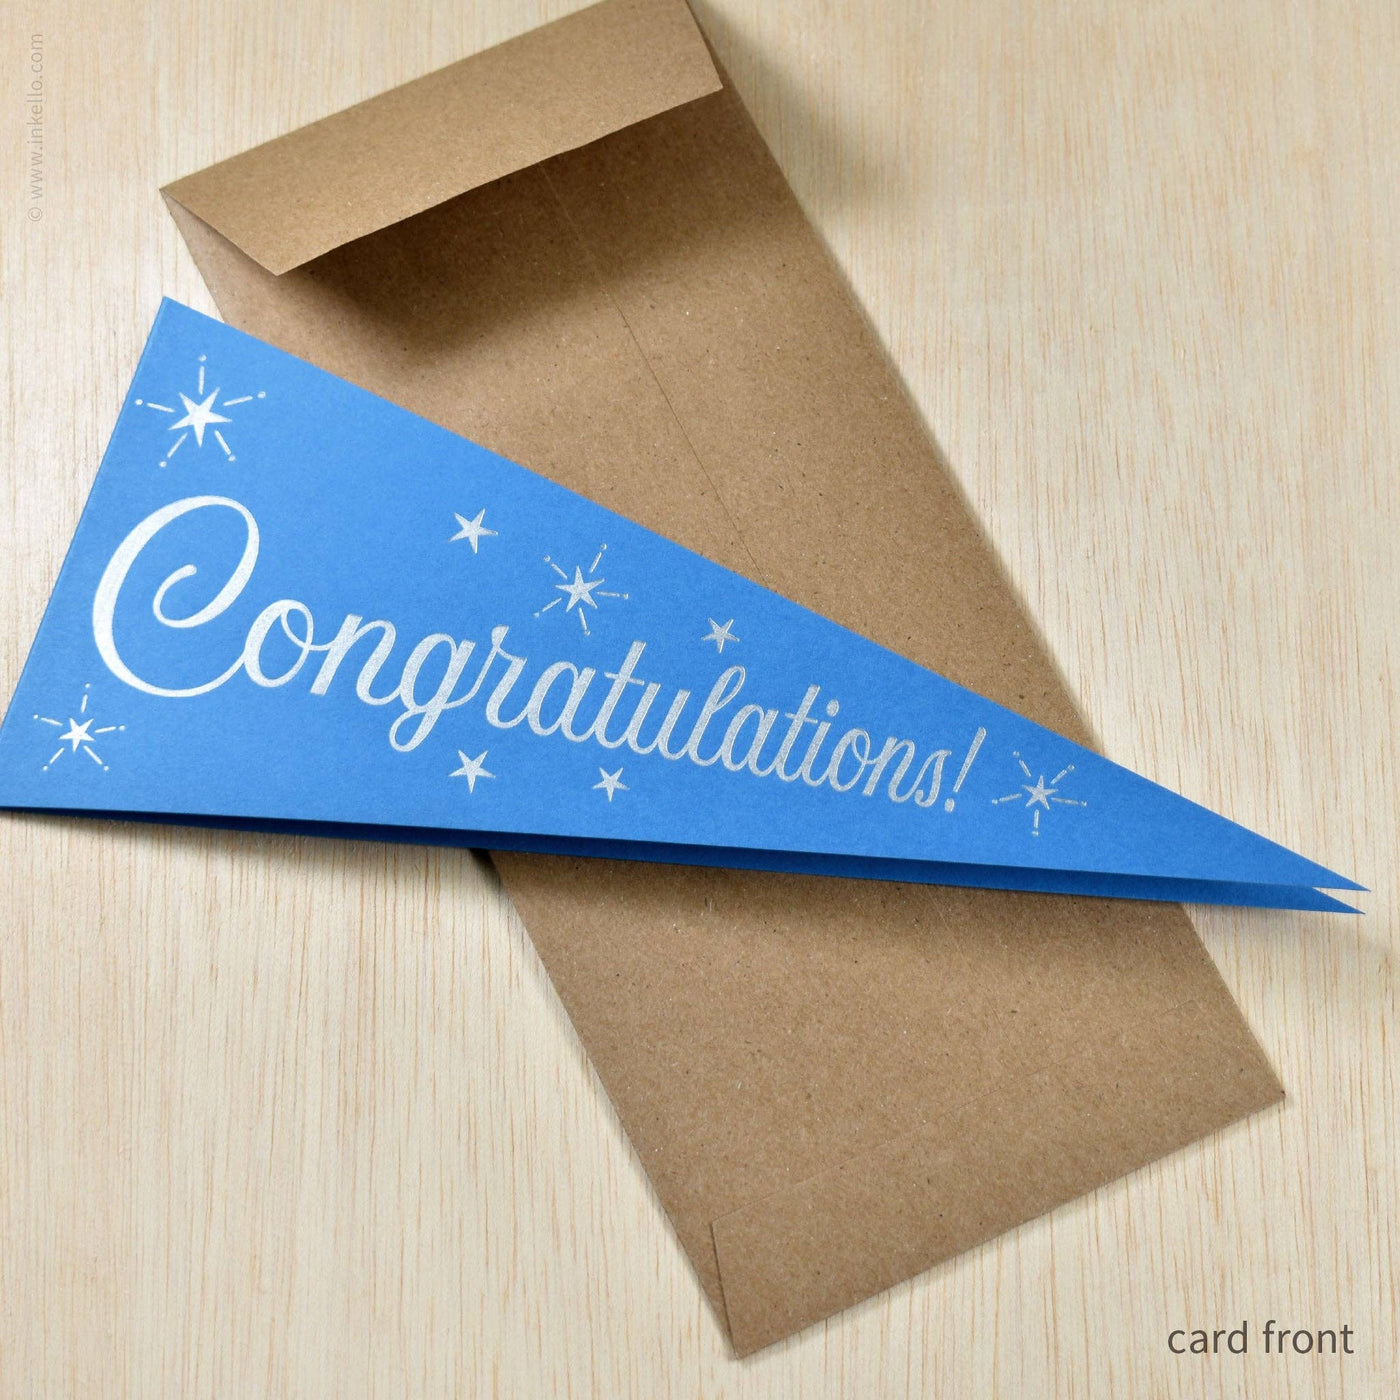 Congratulations Triangular Pennant Card (#530)